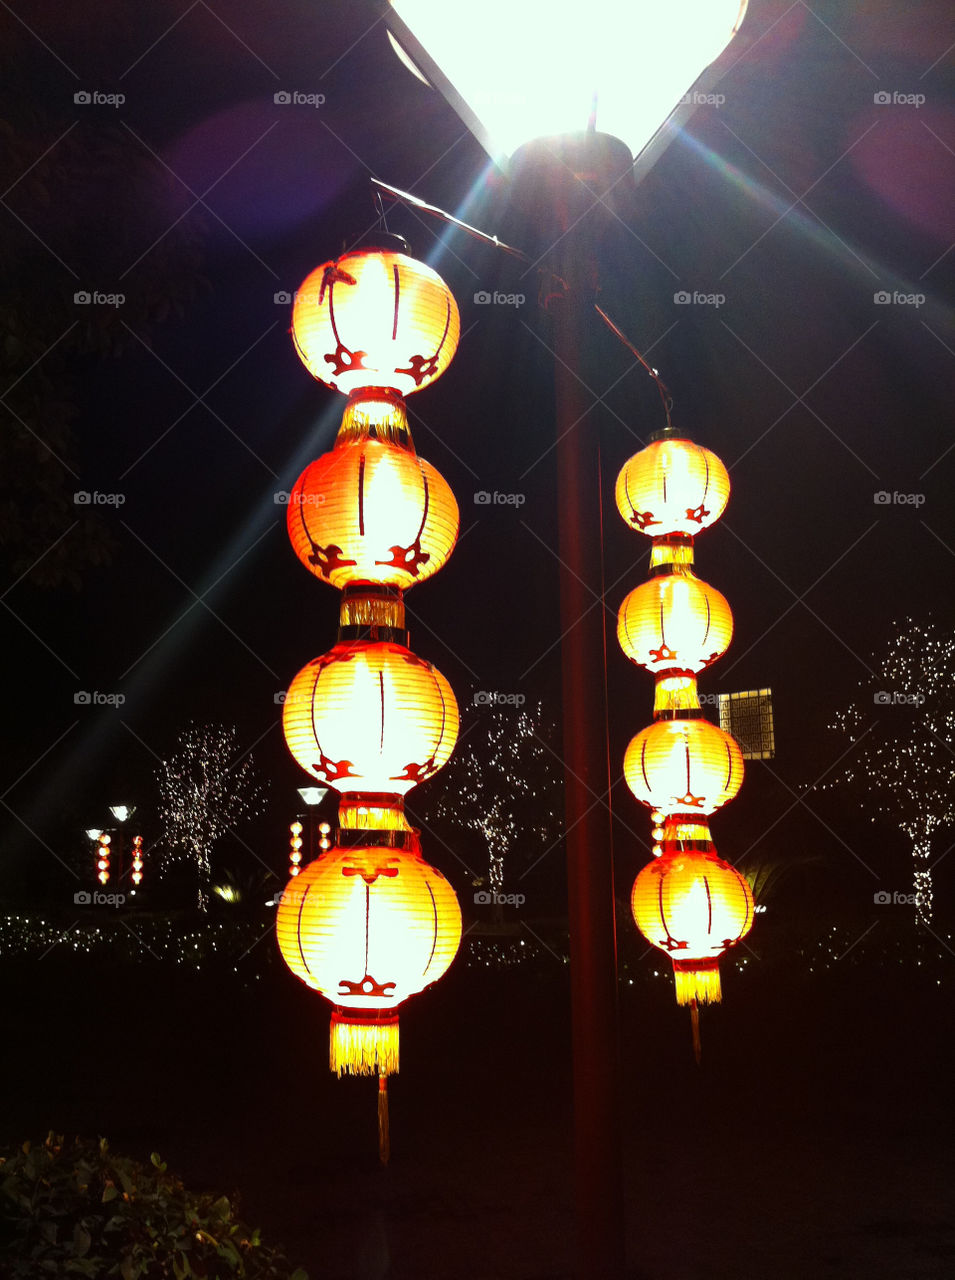 Lantern display in China.